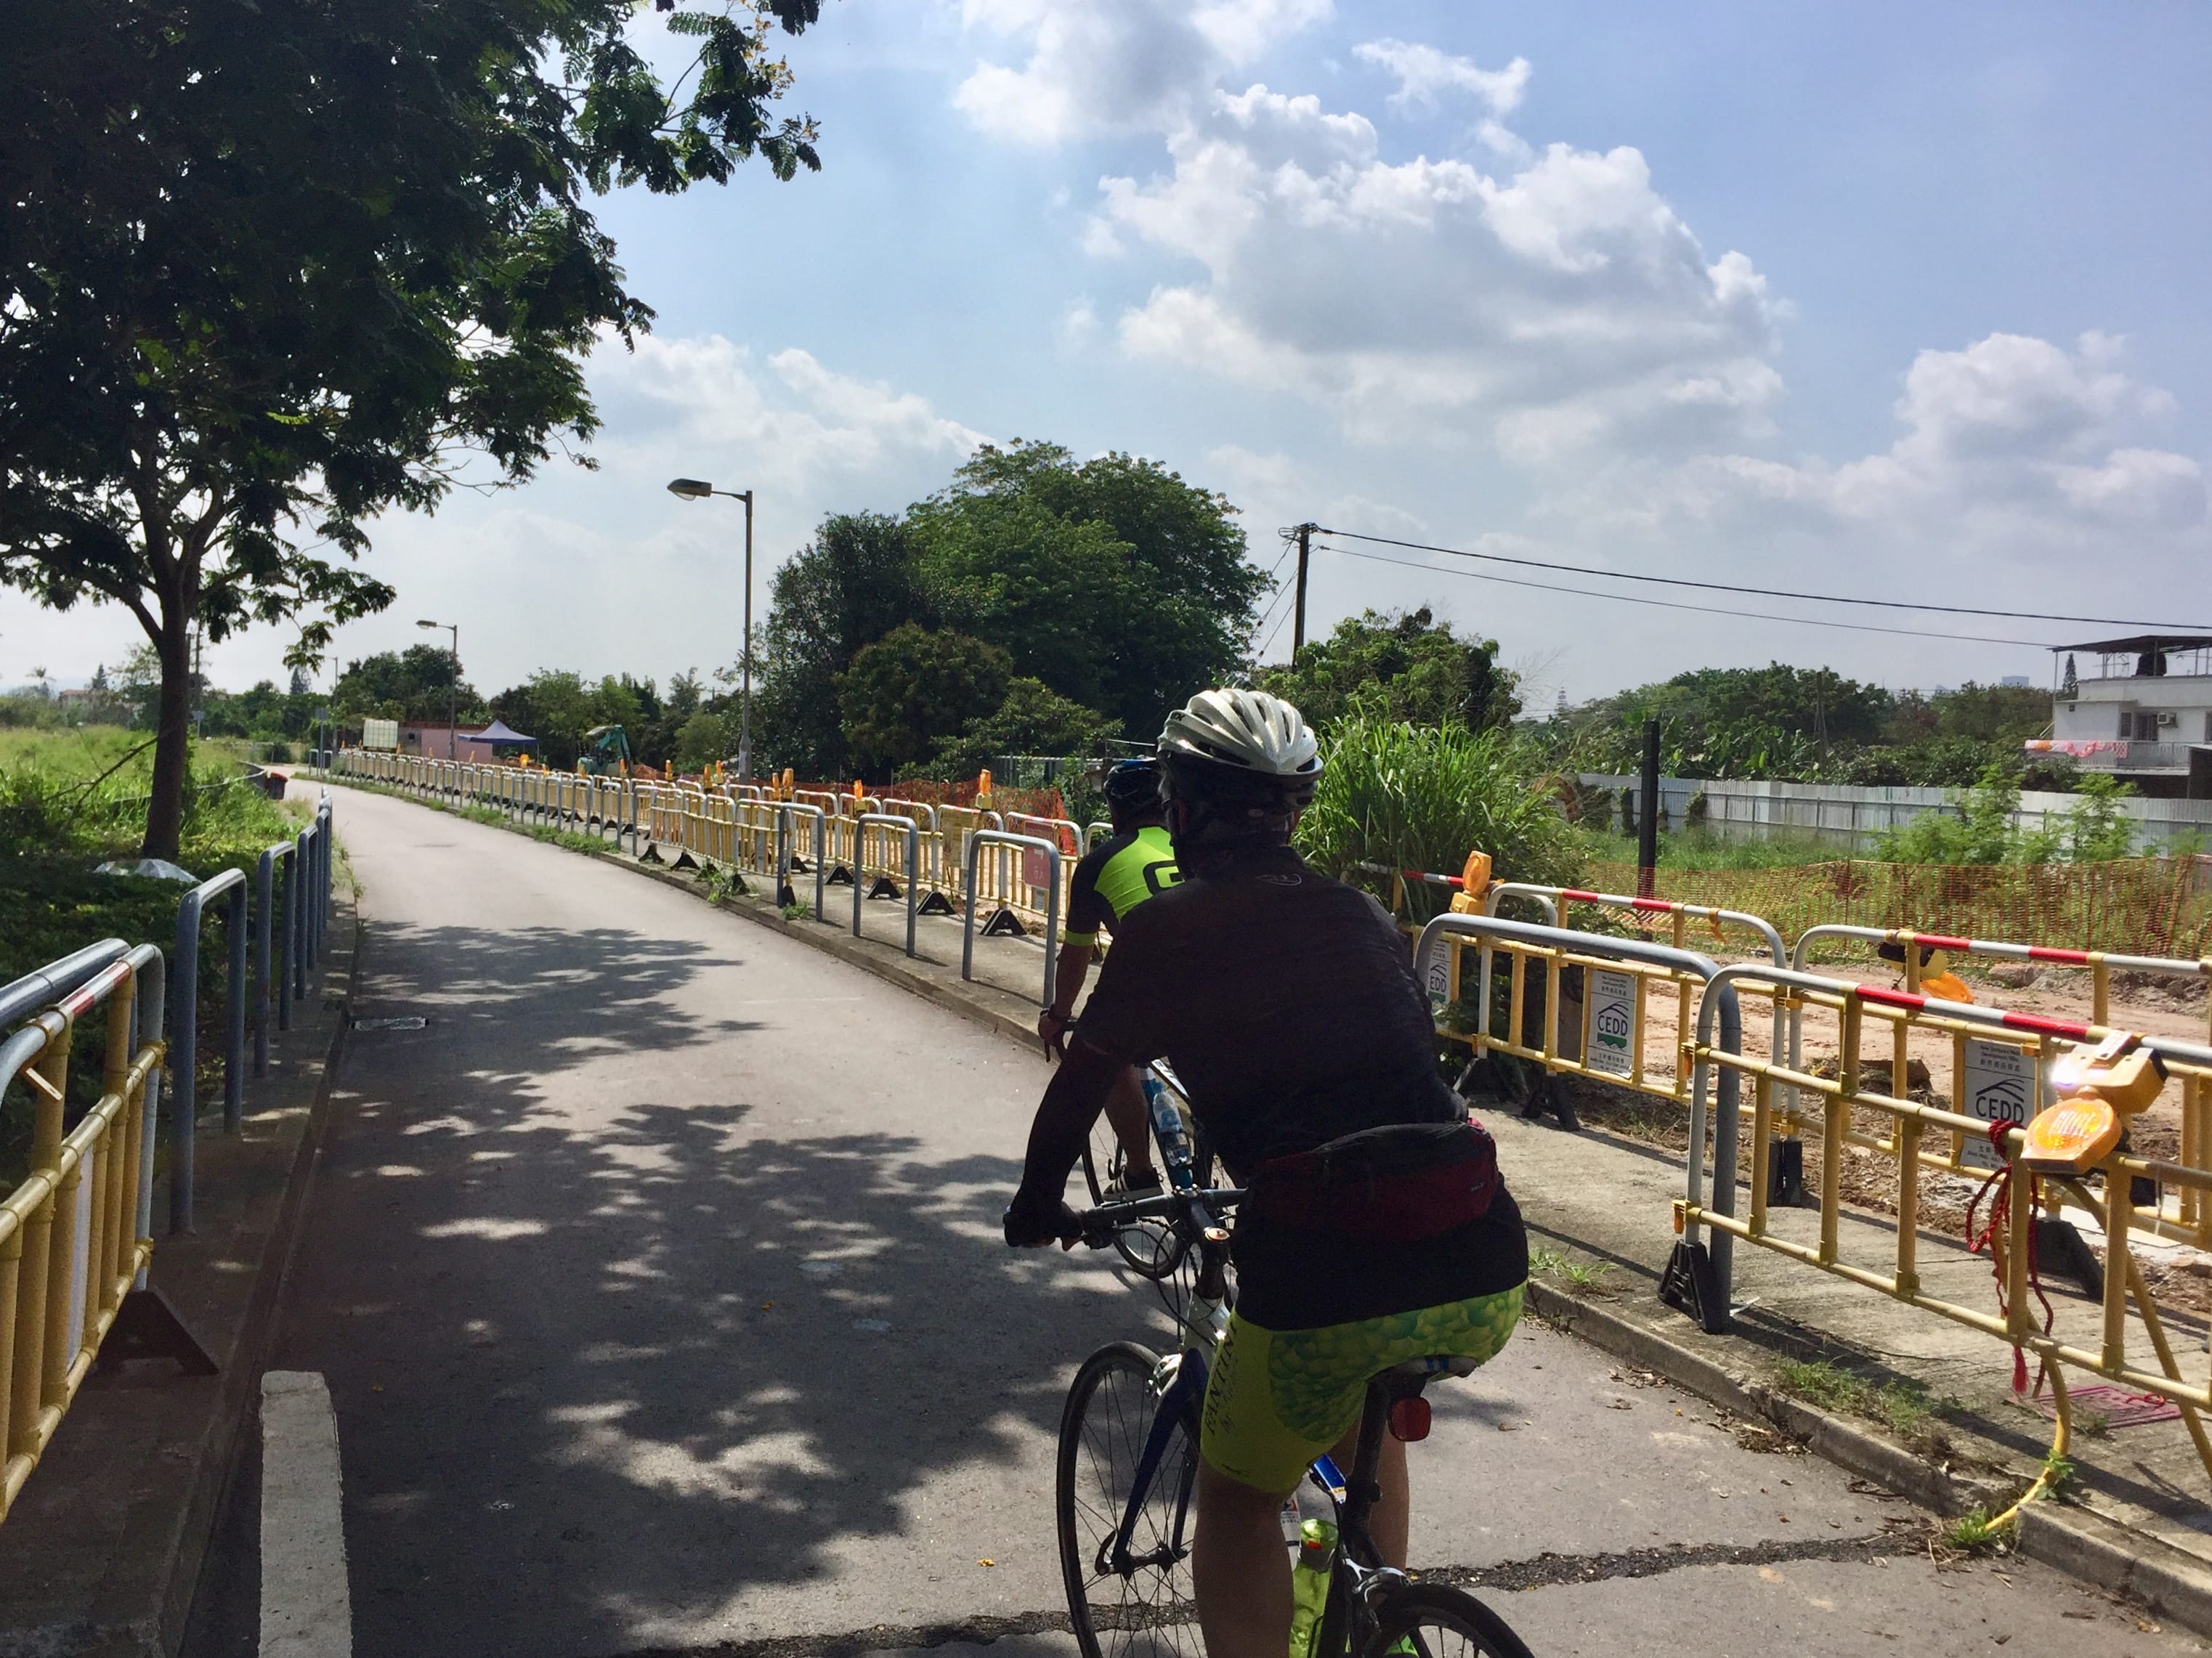 Riding along Yau Pok Road to today's destination